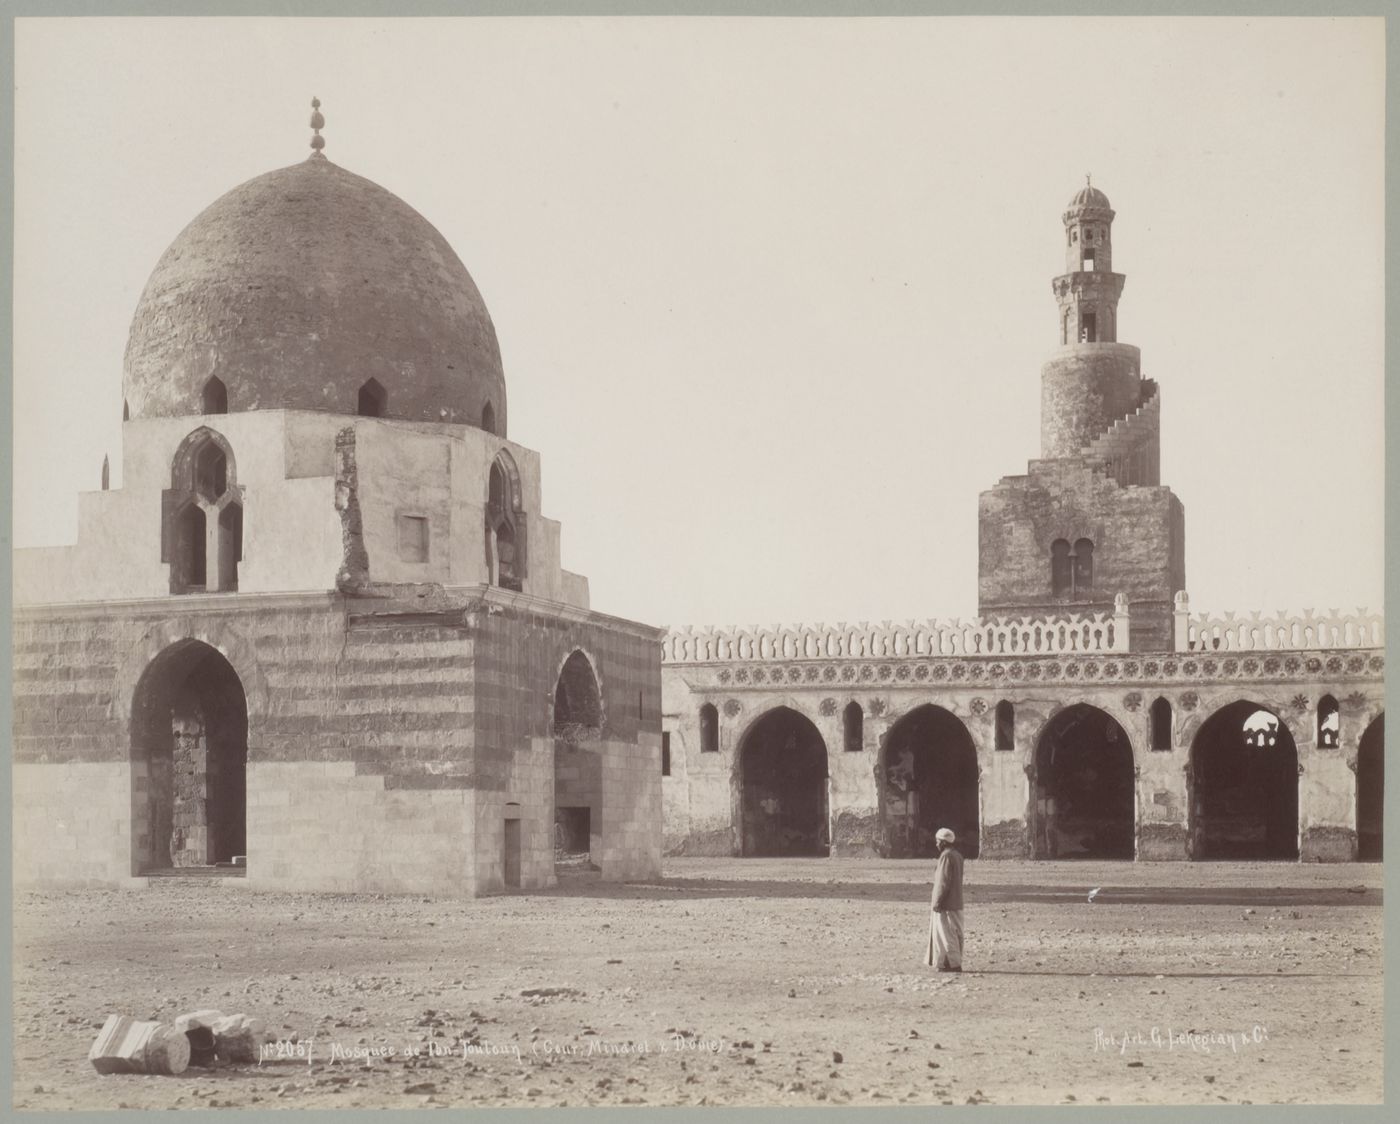 Ibn-Toulon Mosque, courtyard, minaret, dome, Cairo, Egypt